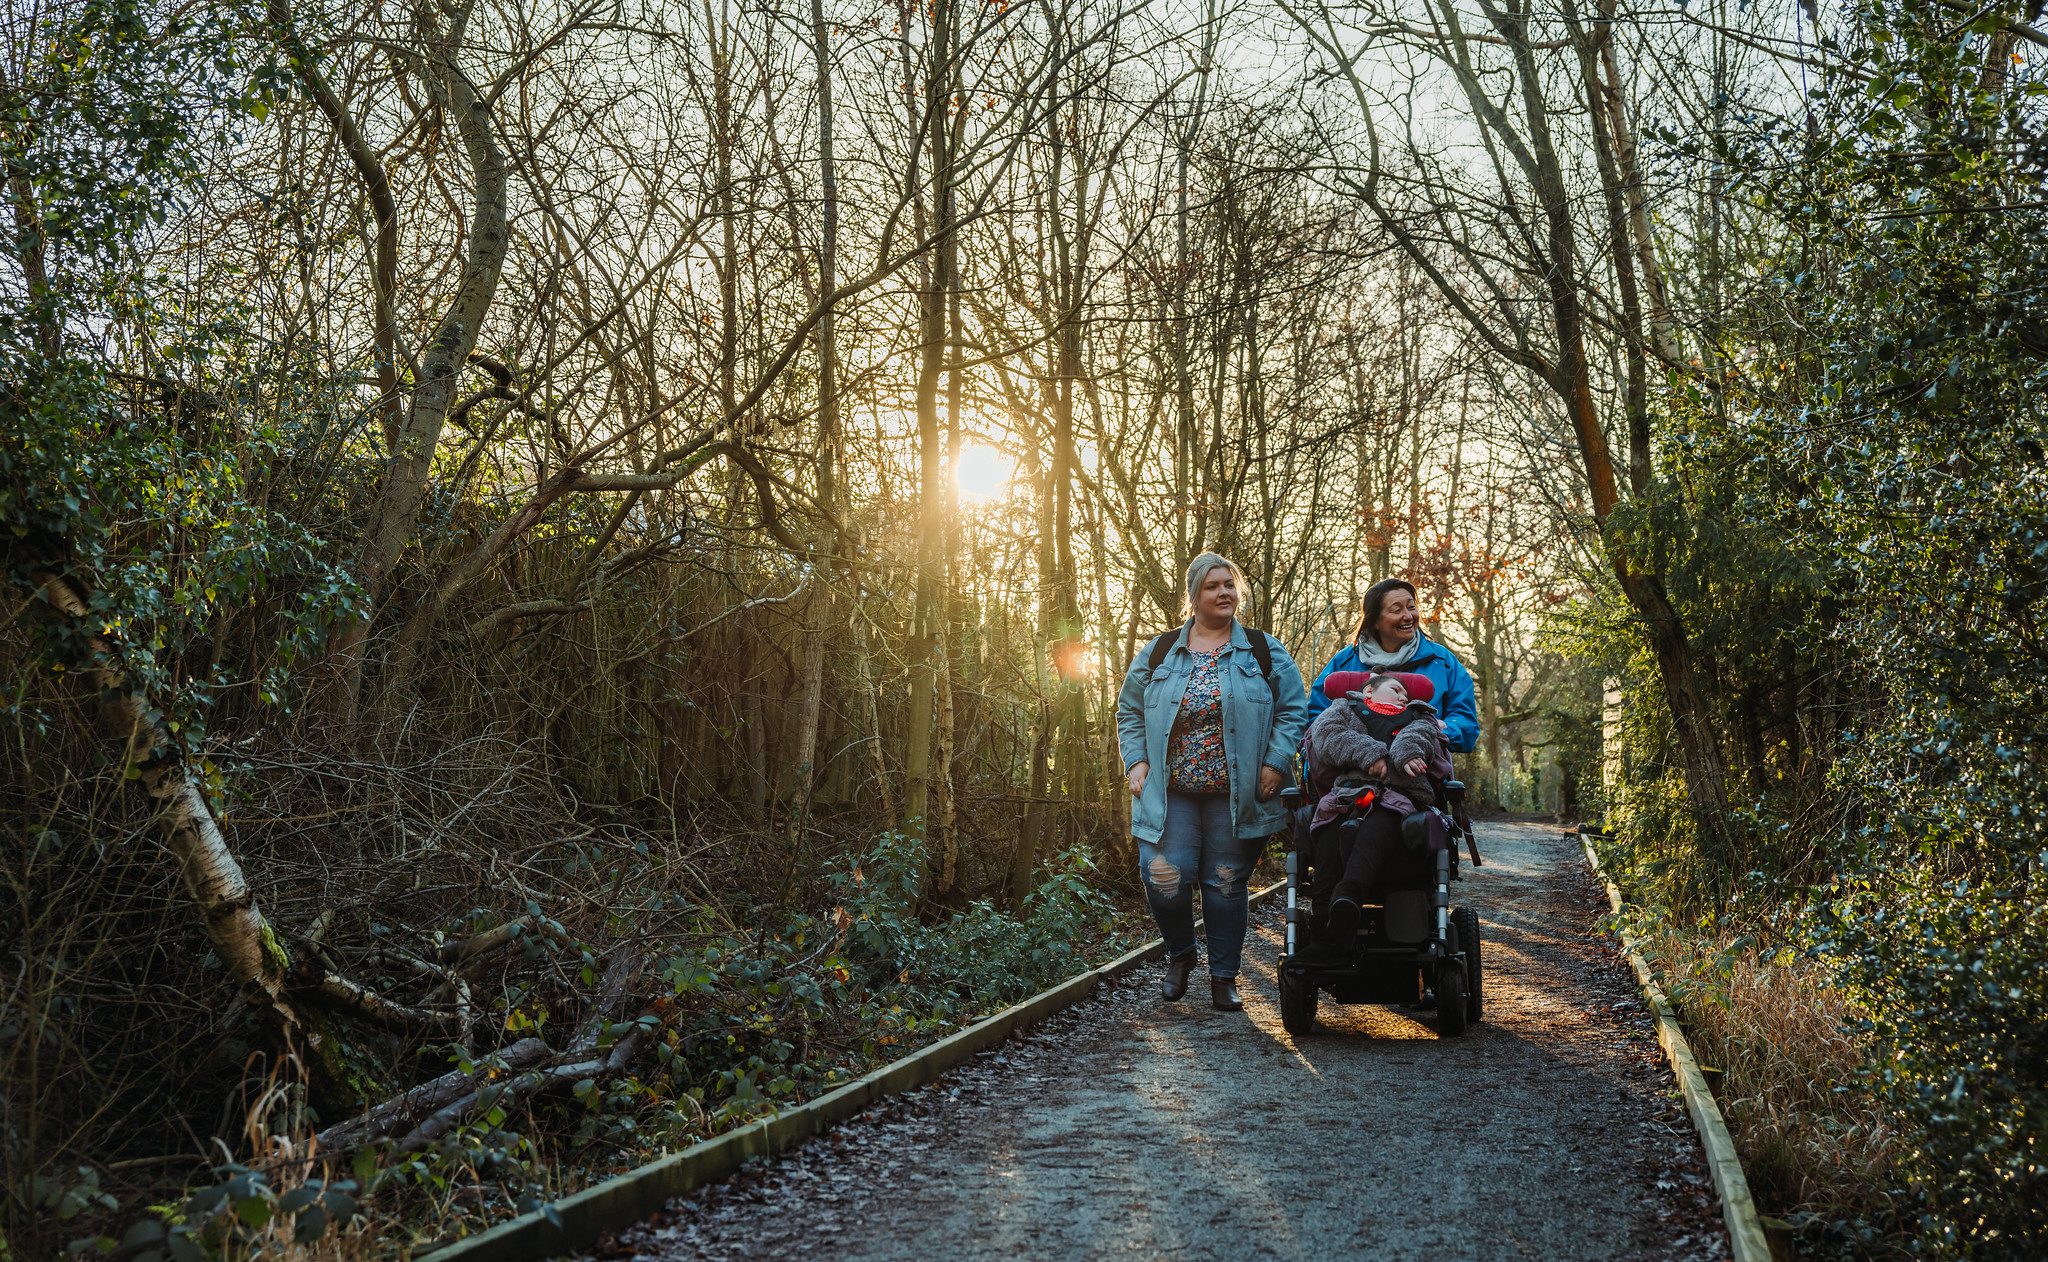 Two women and girl in wheelchair walking along footpath in winter